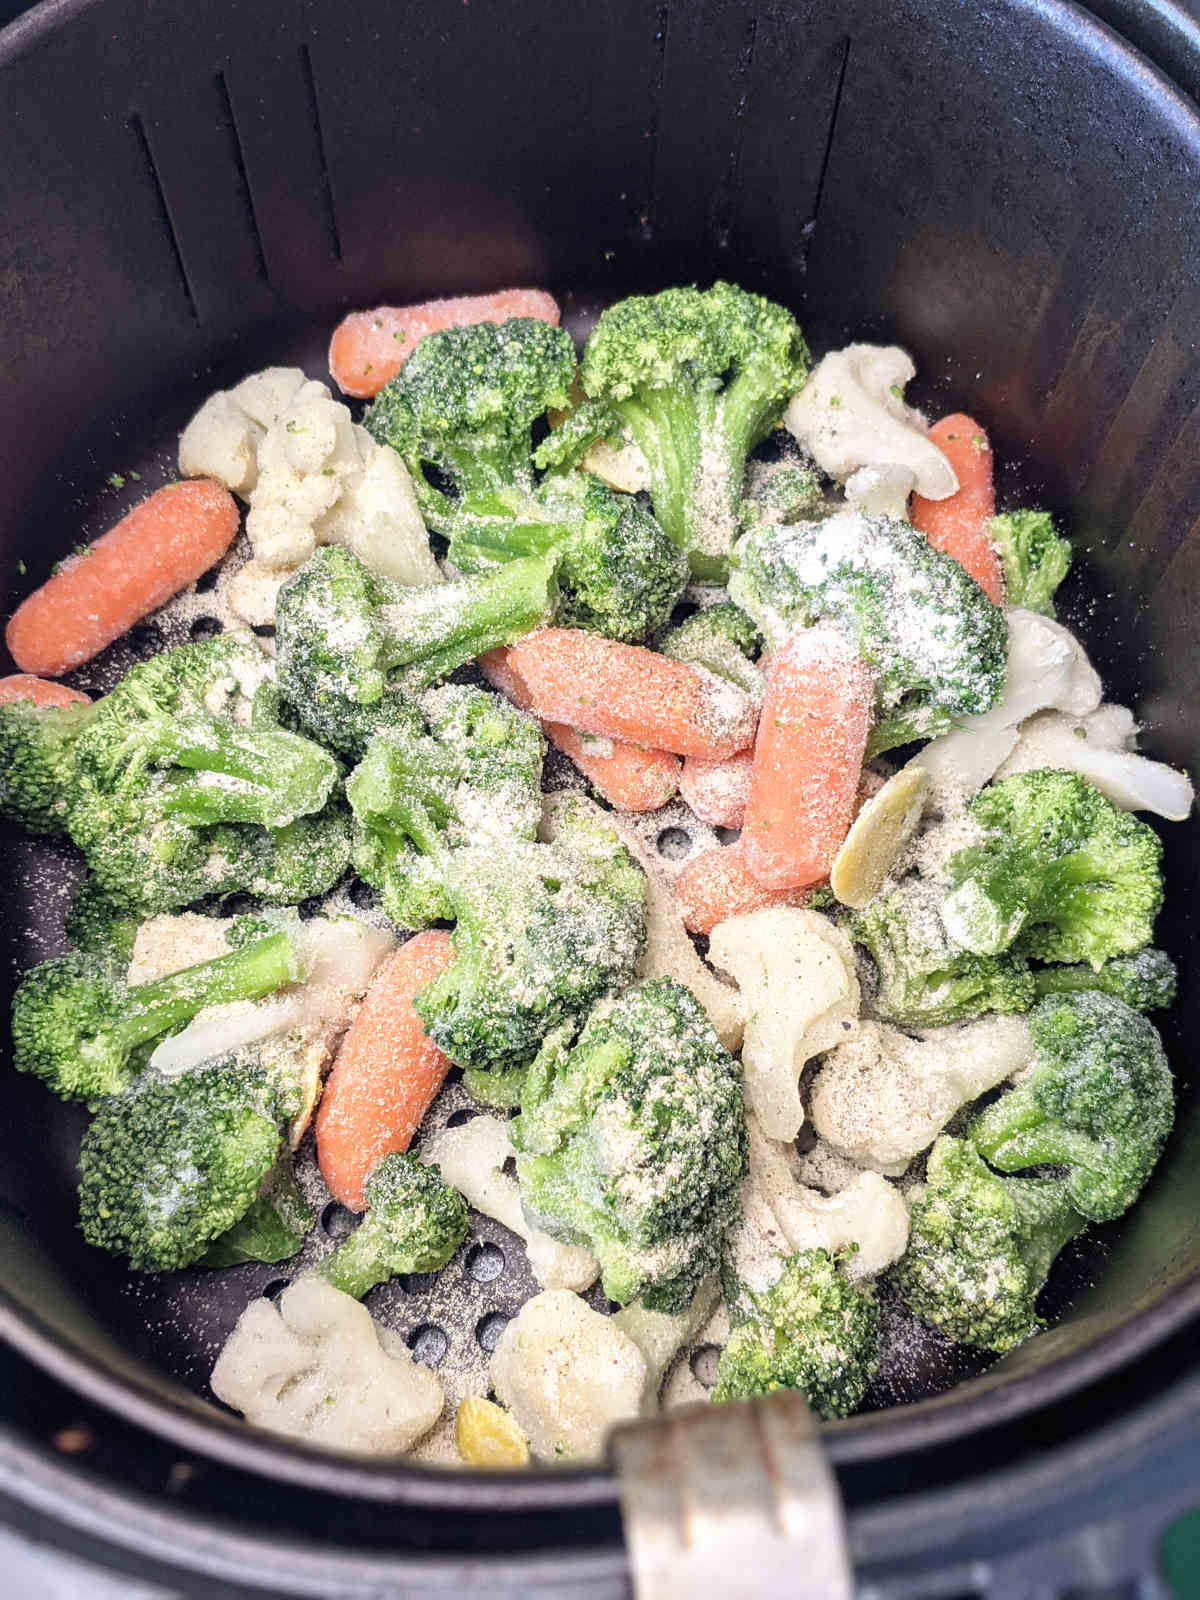 Frozen veggies in air fryer topped with seasonings.